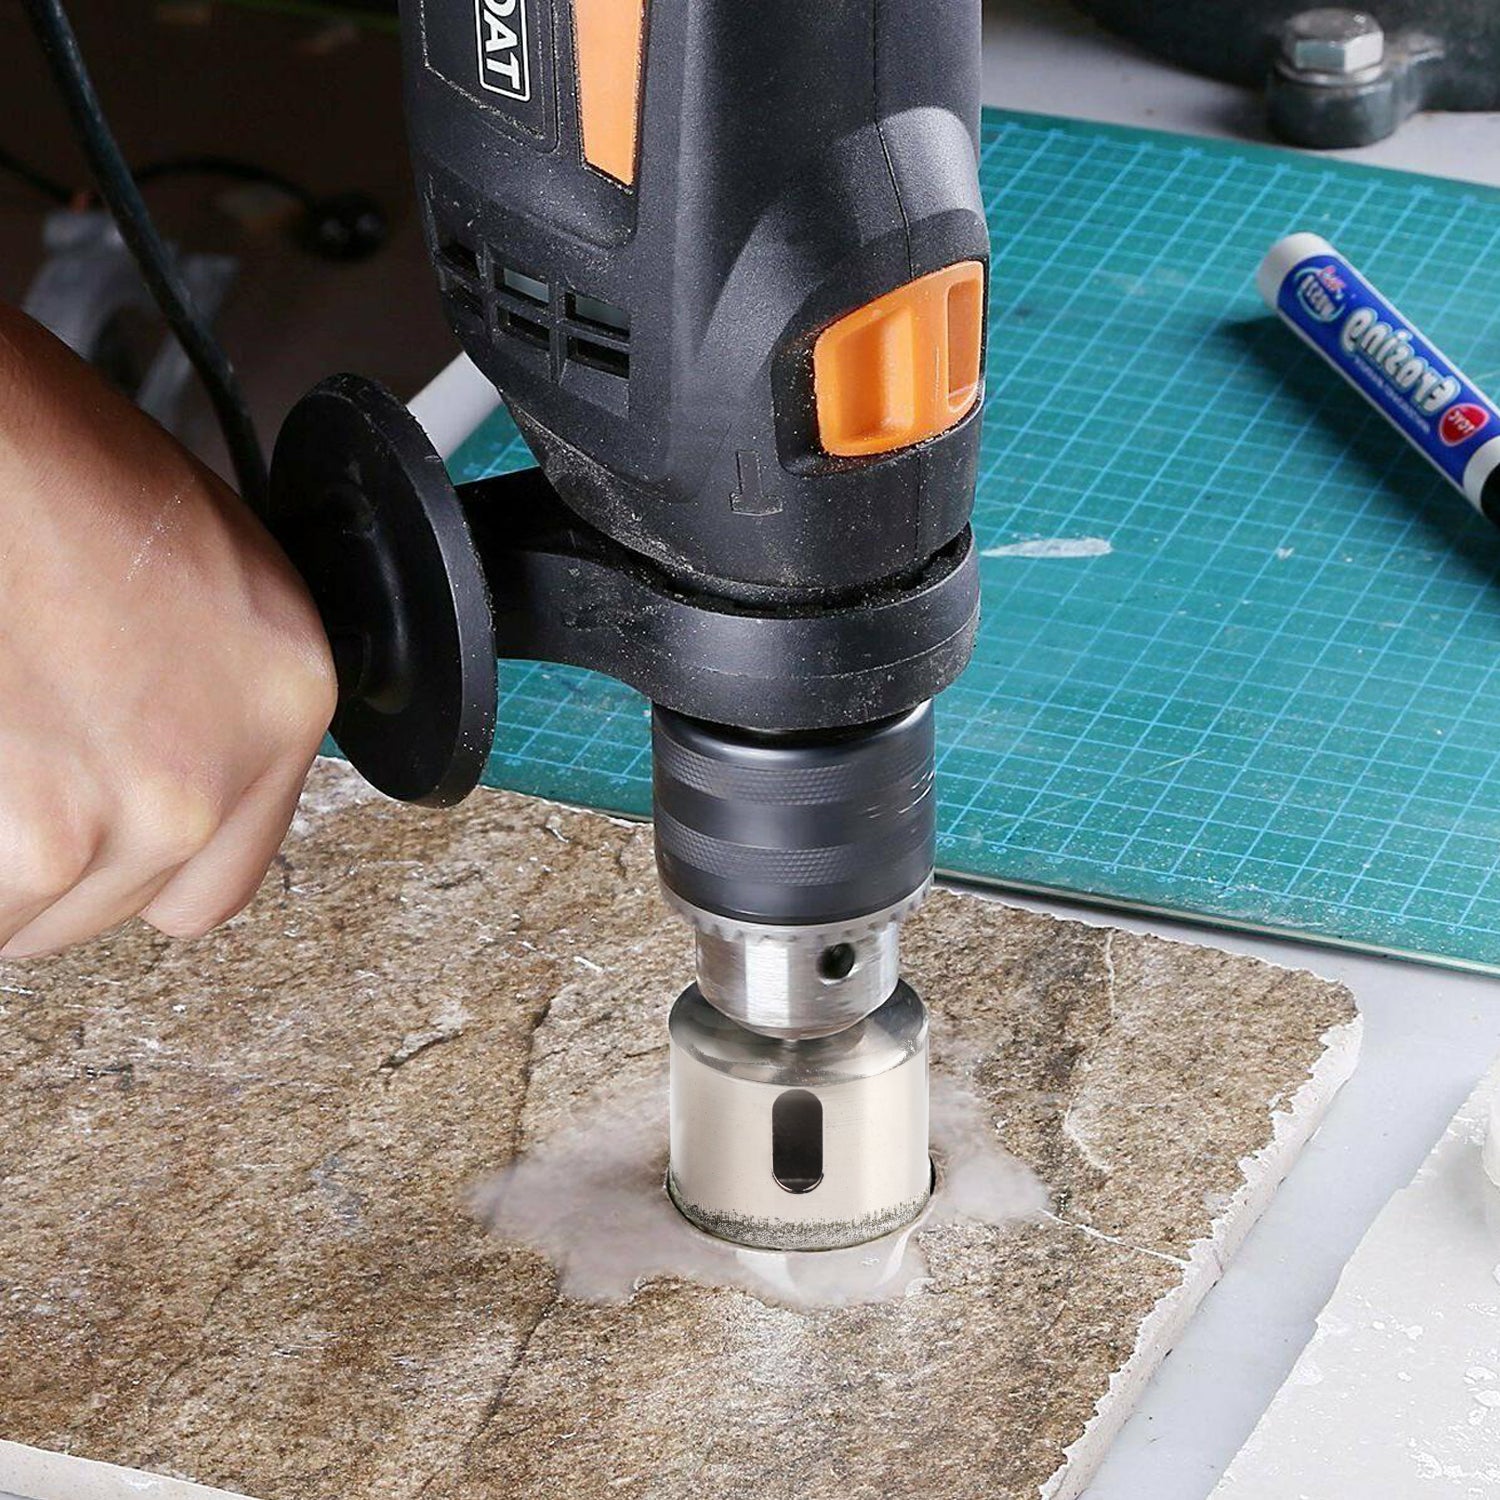 65mm Diamond Hole Saw Kit Tile Drill Bits for Ceramic, Glass, Tile, Porcelain, Marble, Granite